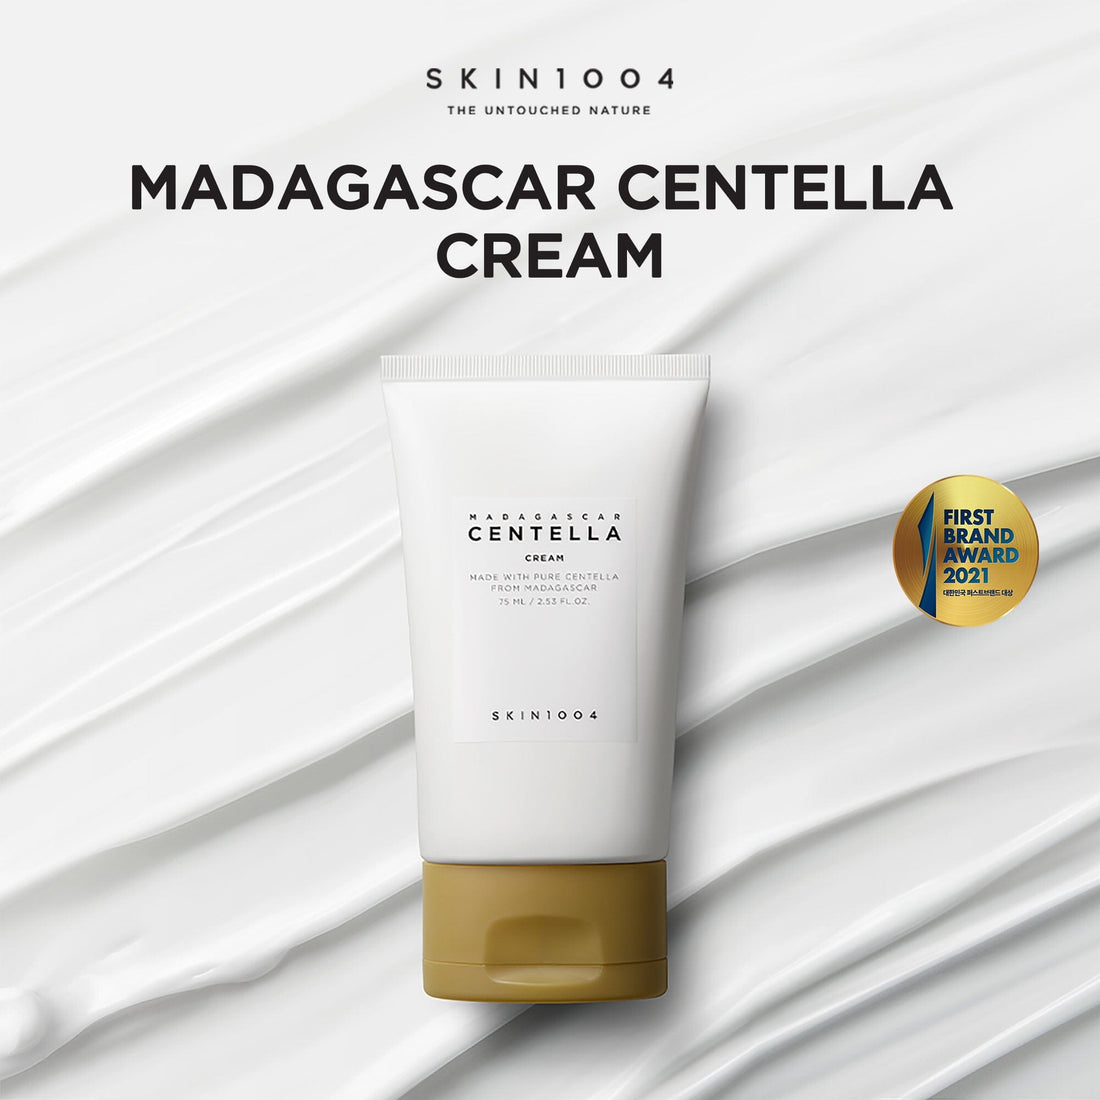 SKIN1004 Madagascar Centella Cream 75ml, at Orion Beauty. SKIN1004 Official Sole Authorized Retailer in Sri Lanka!